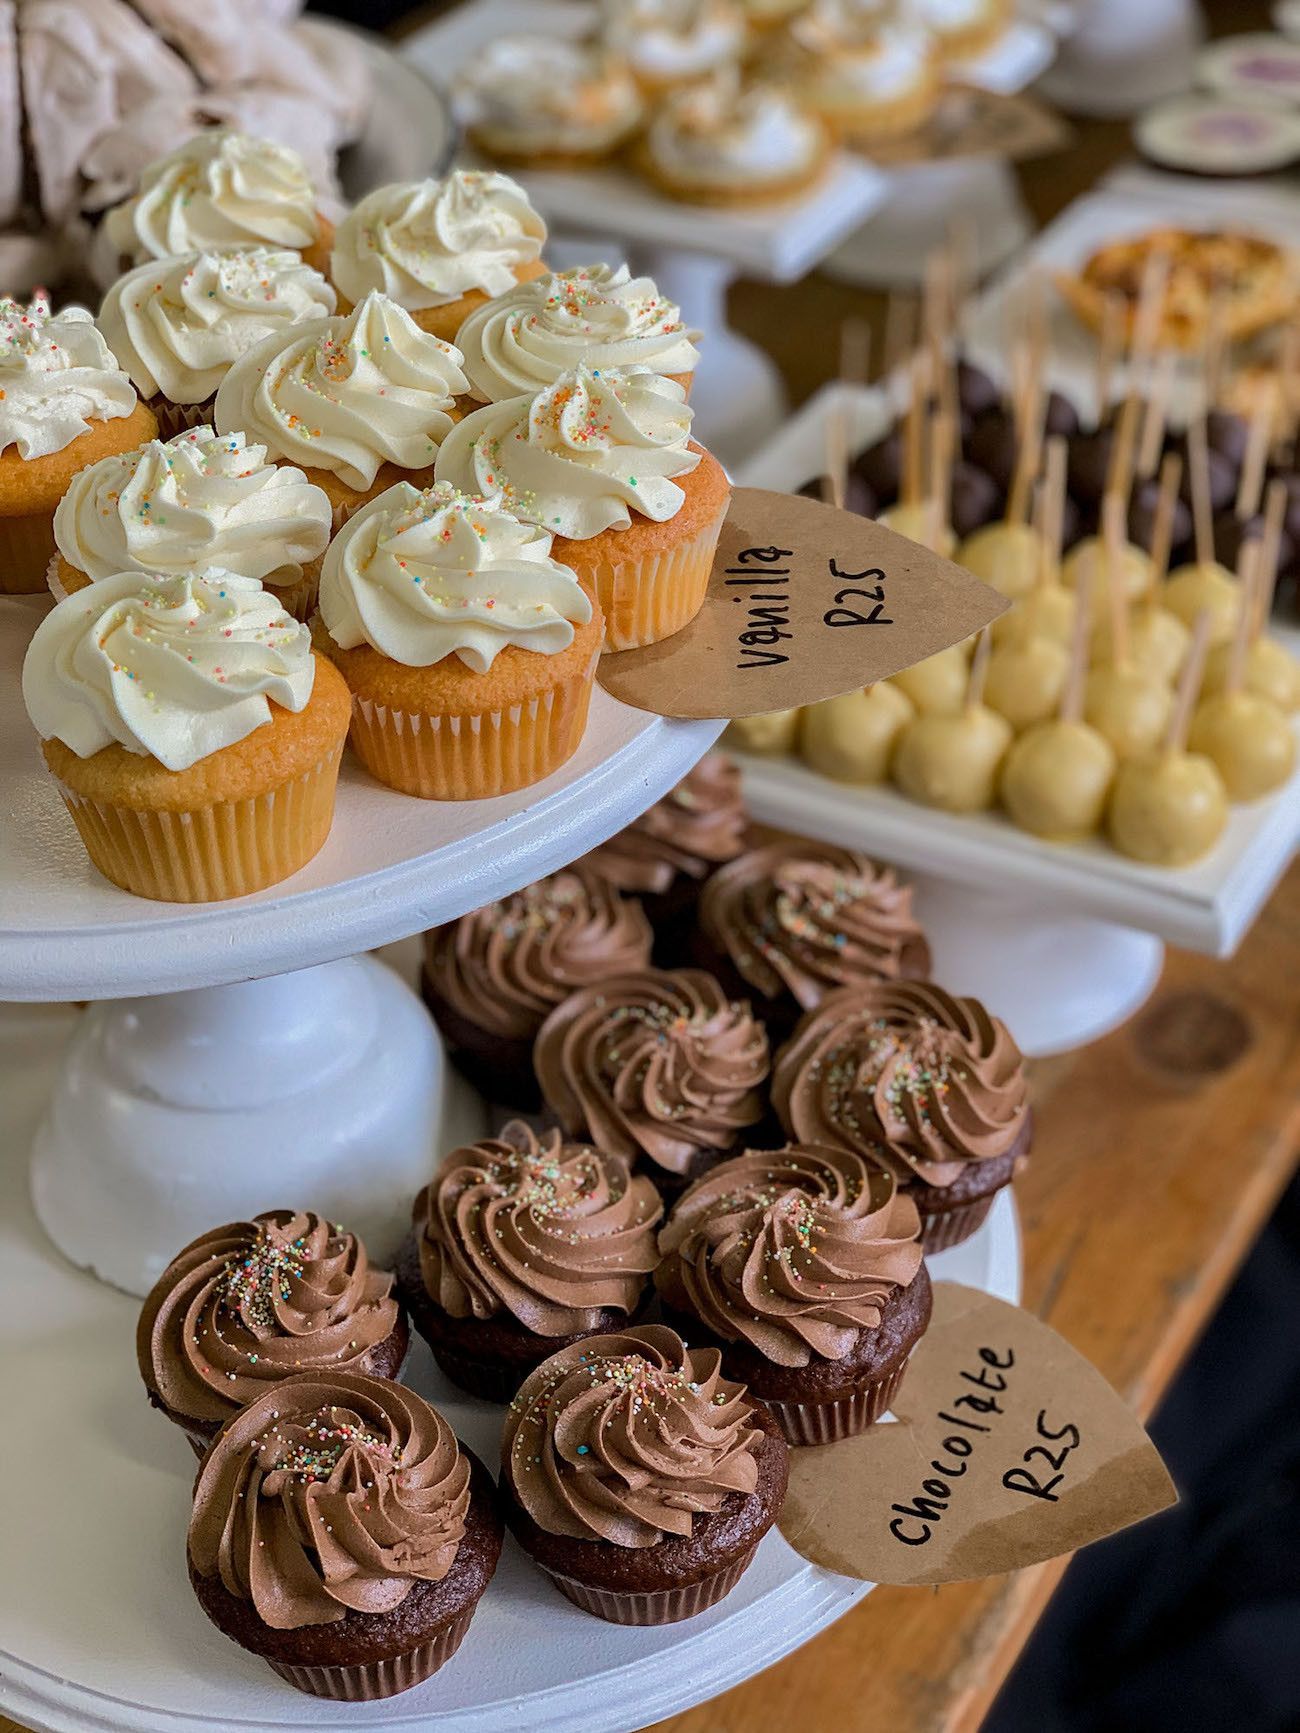 Frühstücks - und Brunch Guide für Kapstadt, Oranjezicht City Farm Market, Cup Cakes, Cake Pops, Süßes